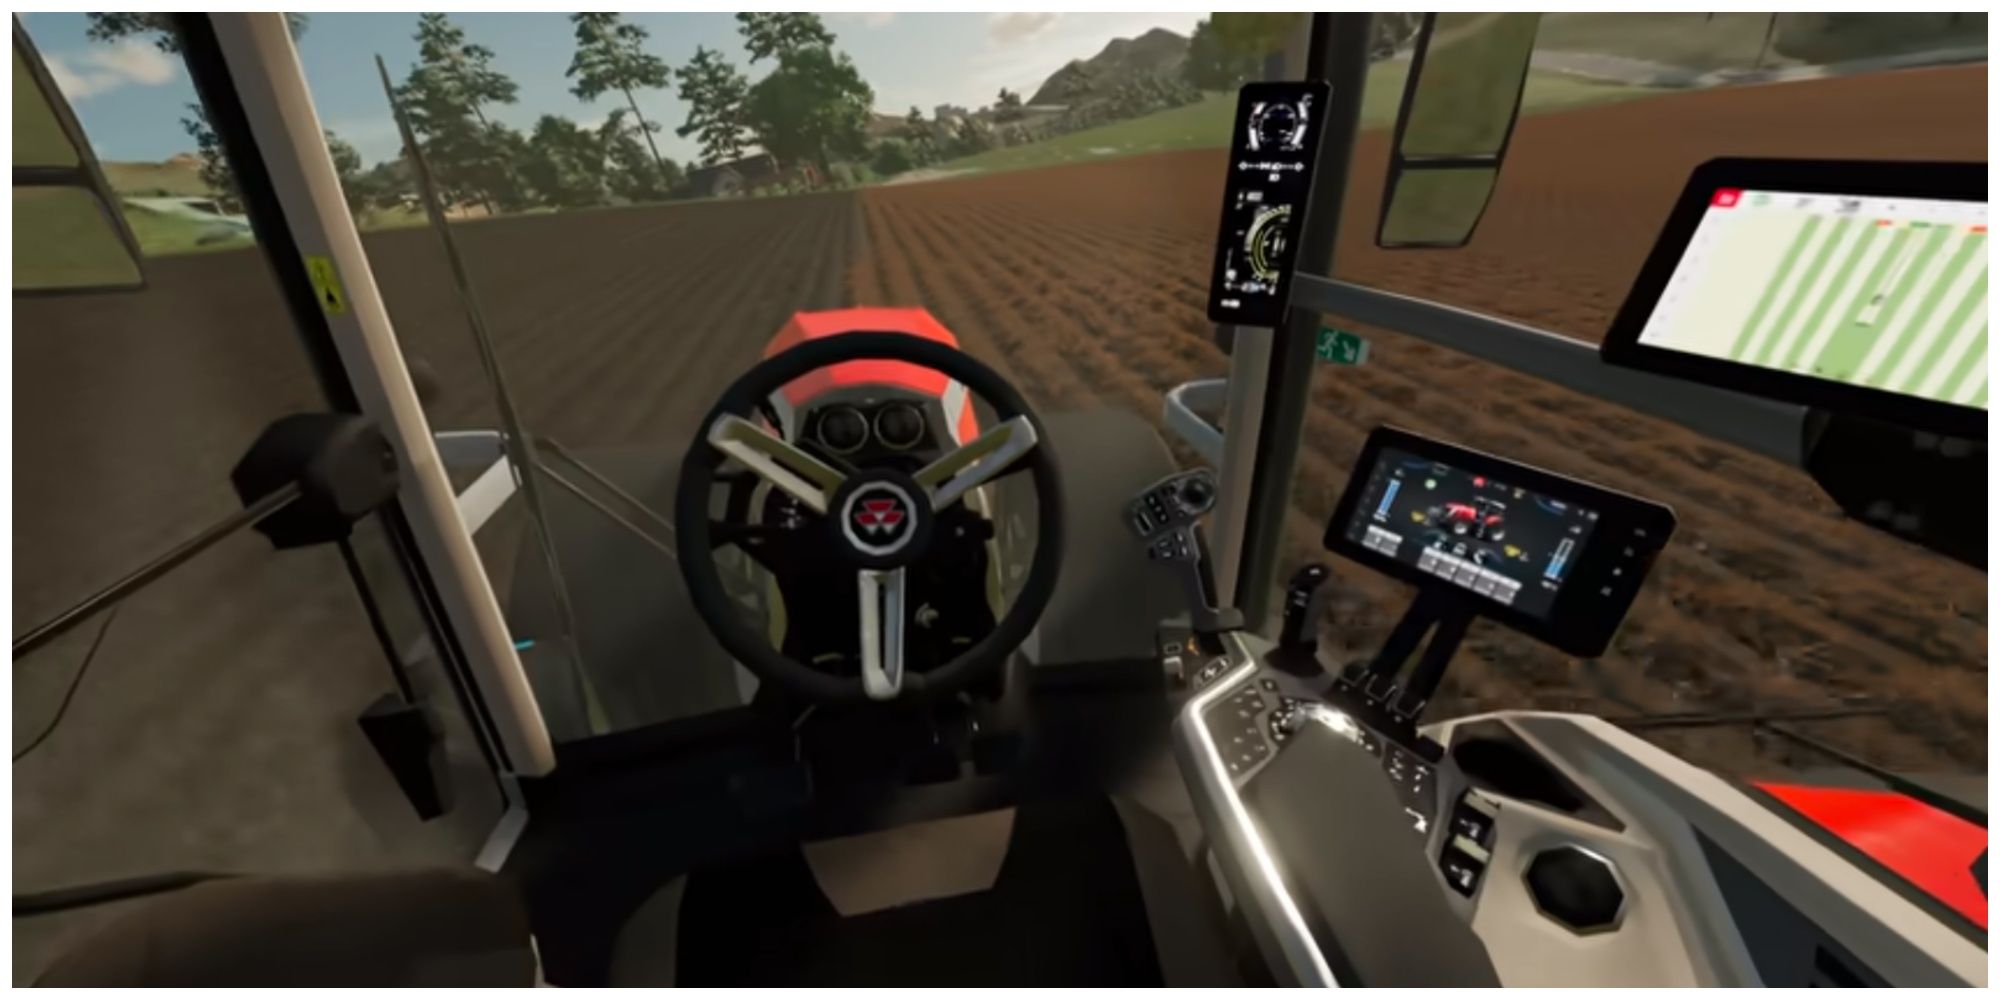 Farming Simulator 22 Vs. Farming Simulator 23: Which Game Is Better?